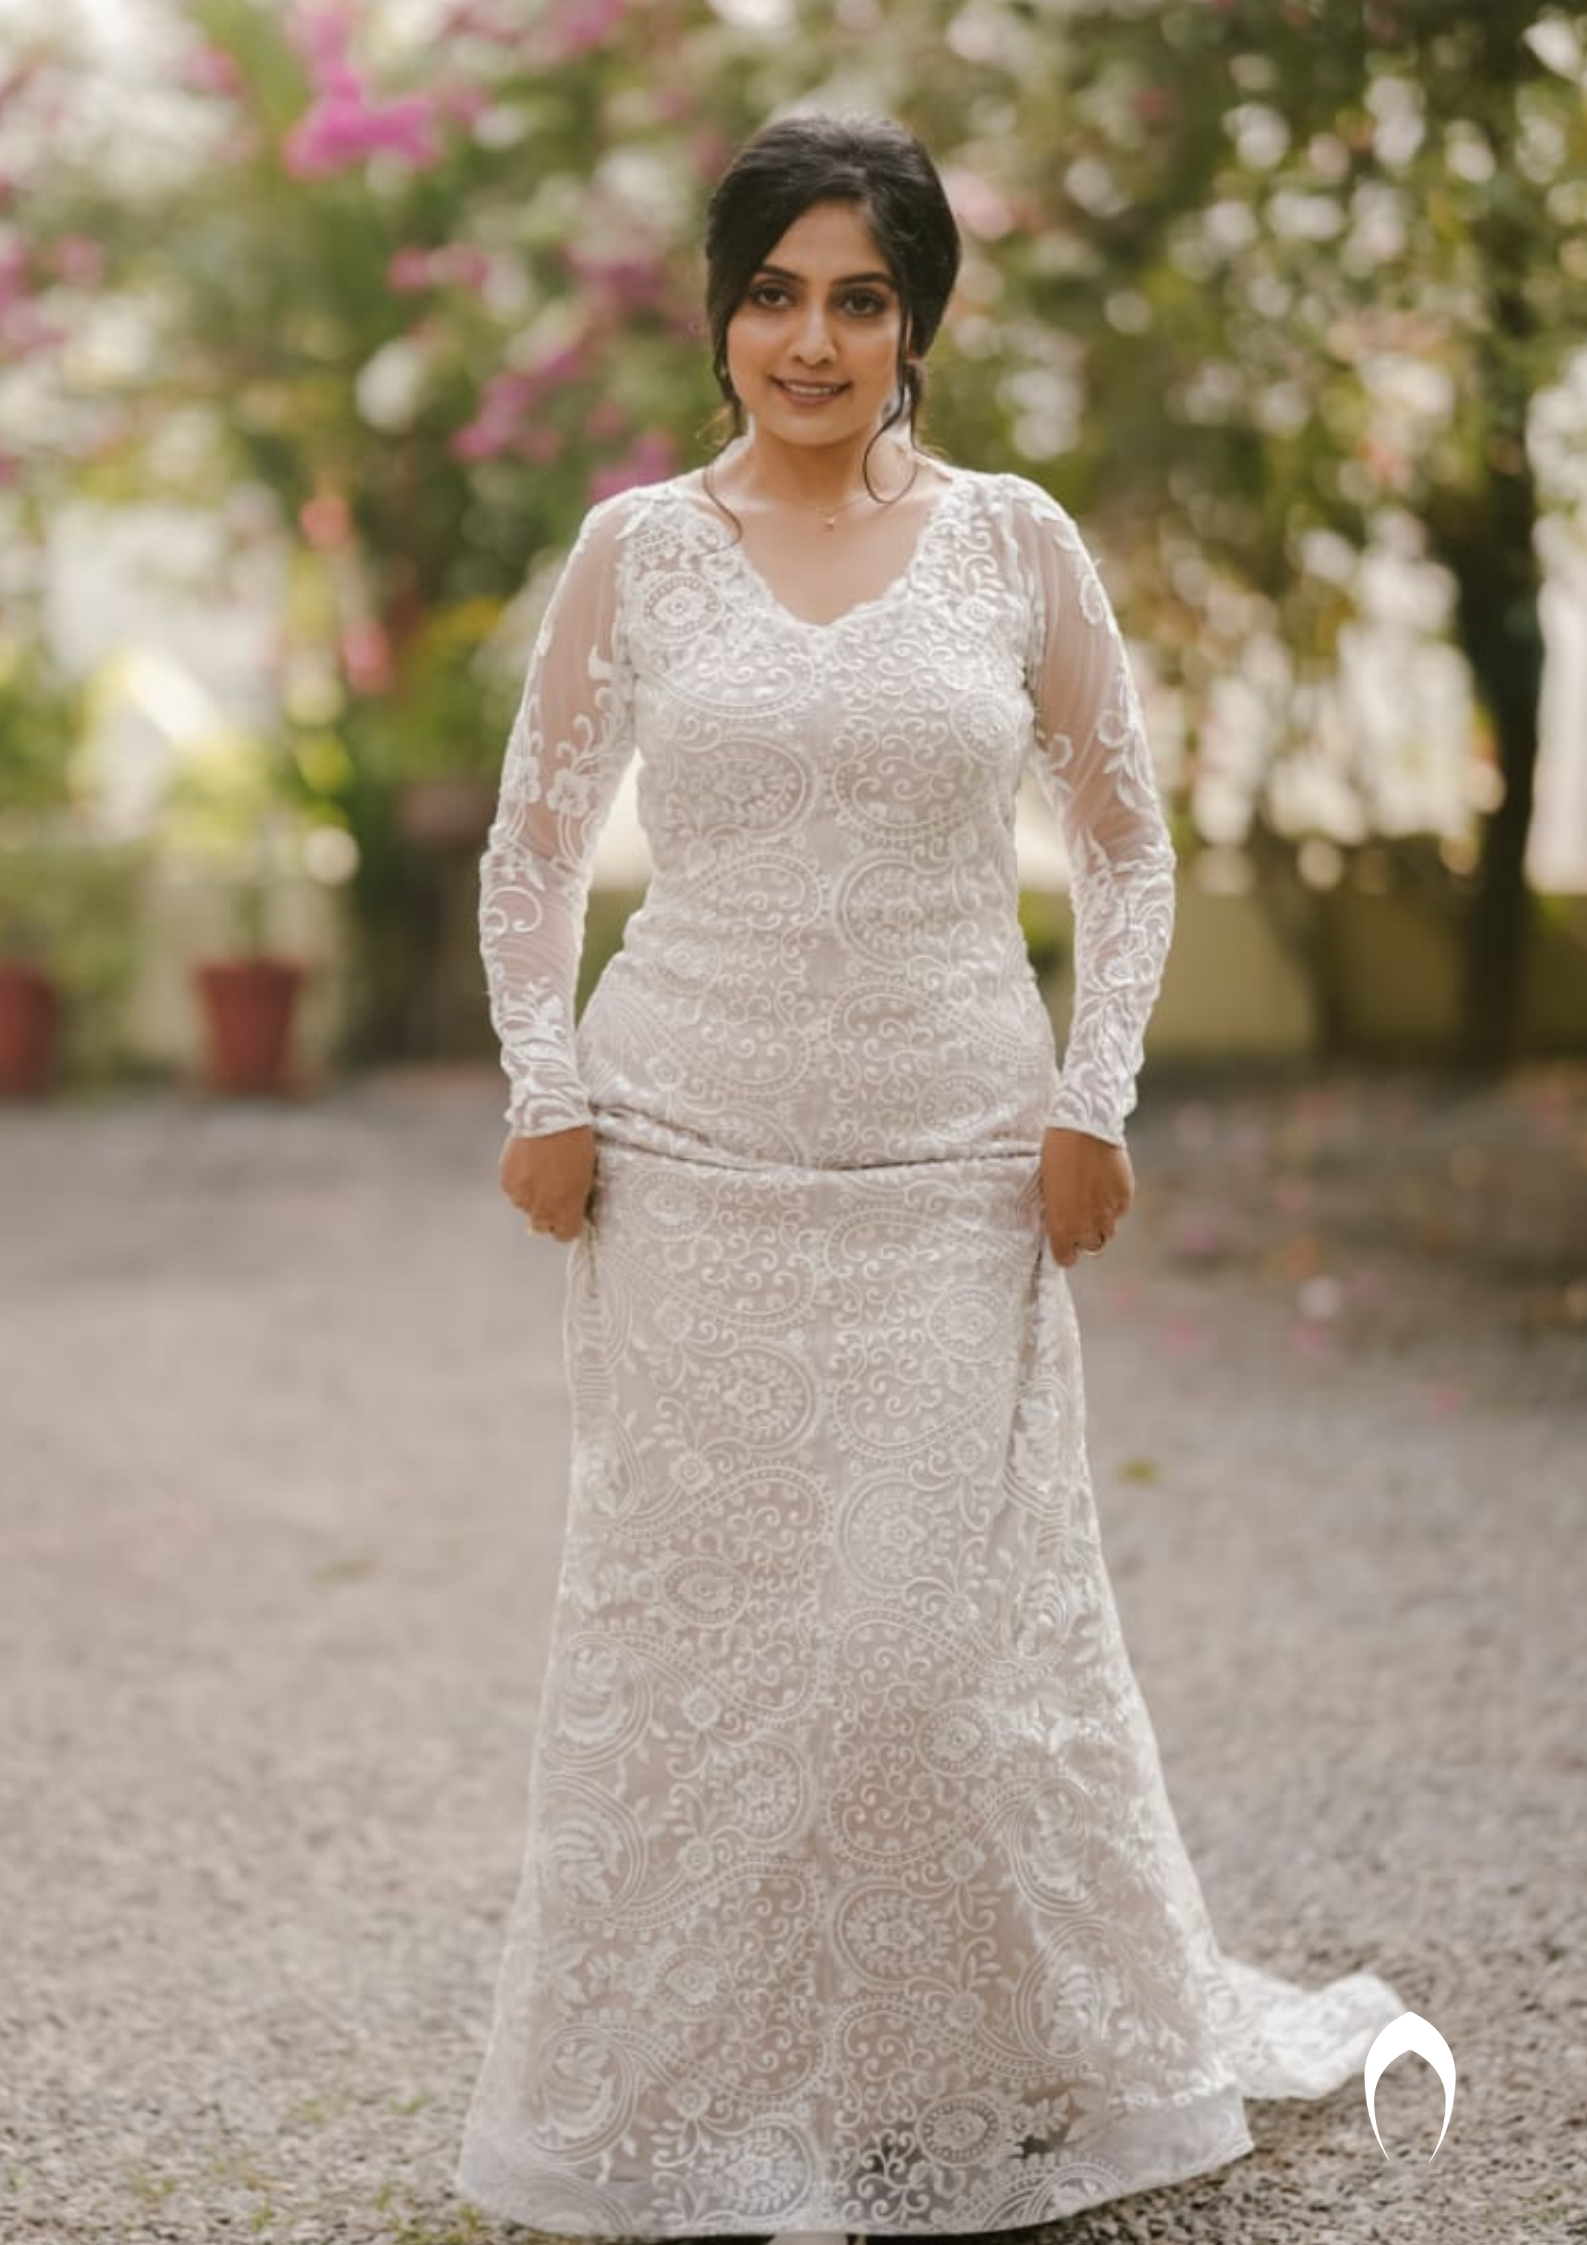 D'Aisle bridals | Christian wedding dress, Christian wedding gowns, Christian  wedding sarees